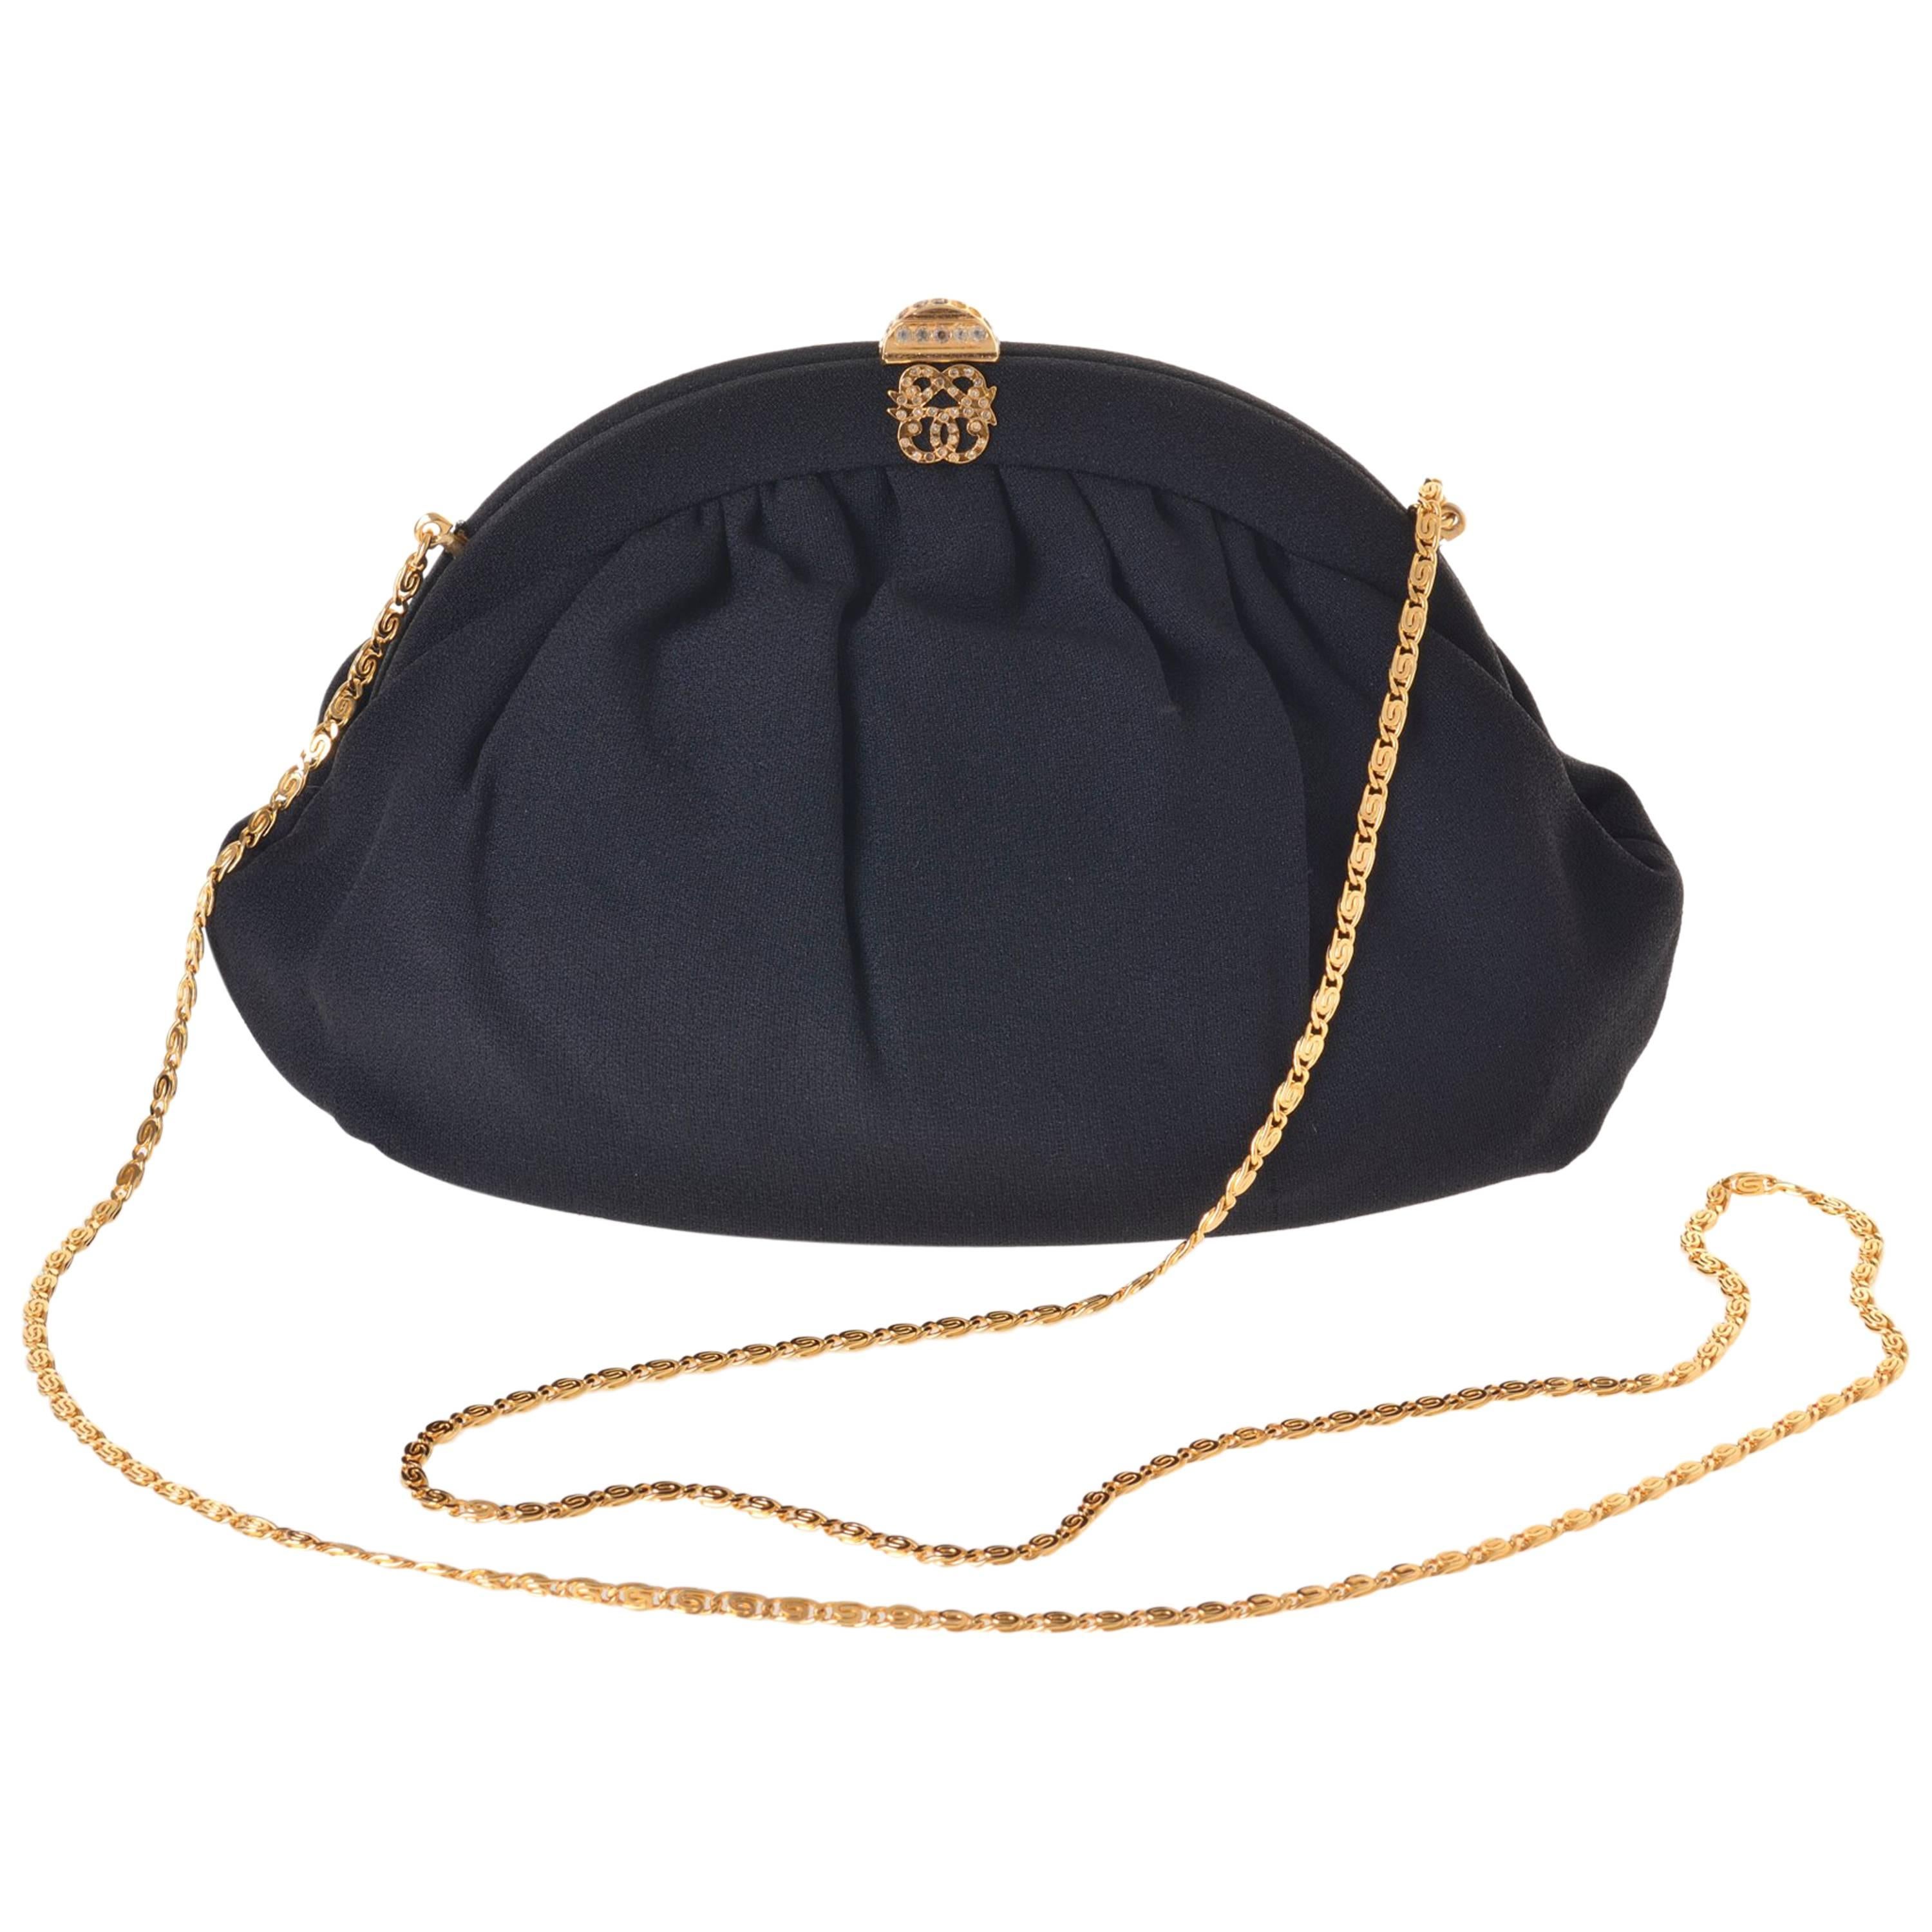 1950s PIROVANO Italian Couture Black Silk Purse Handbag